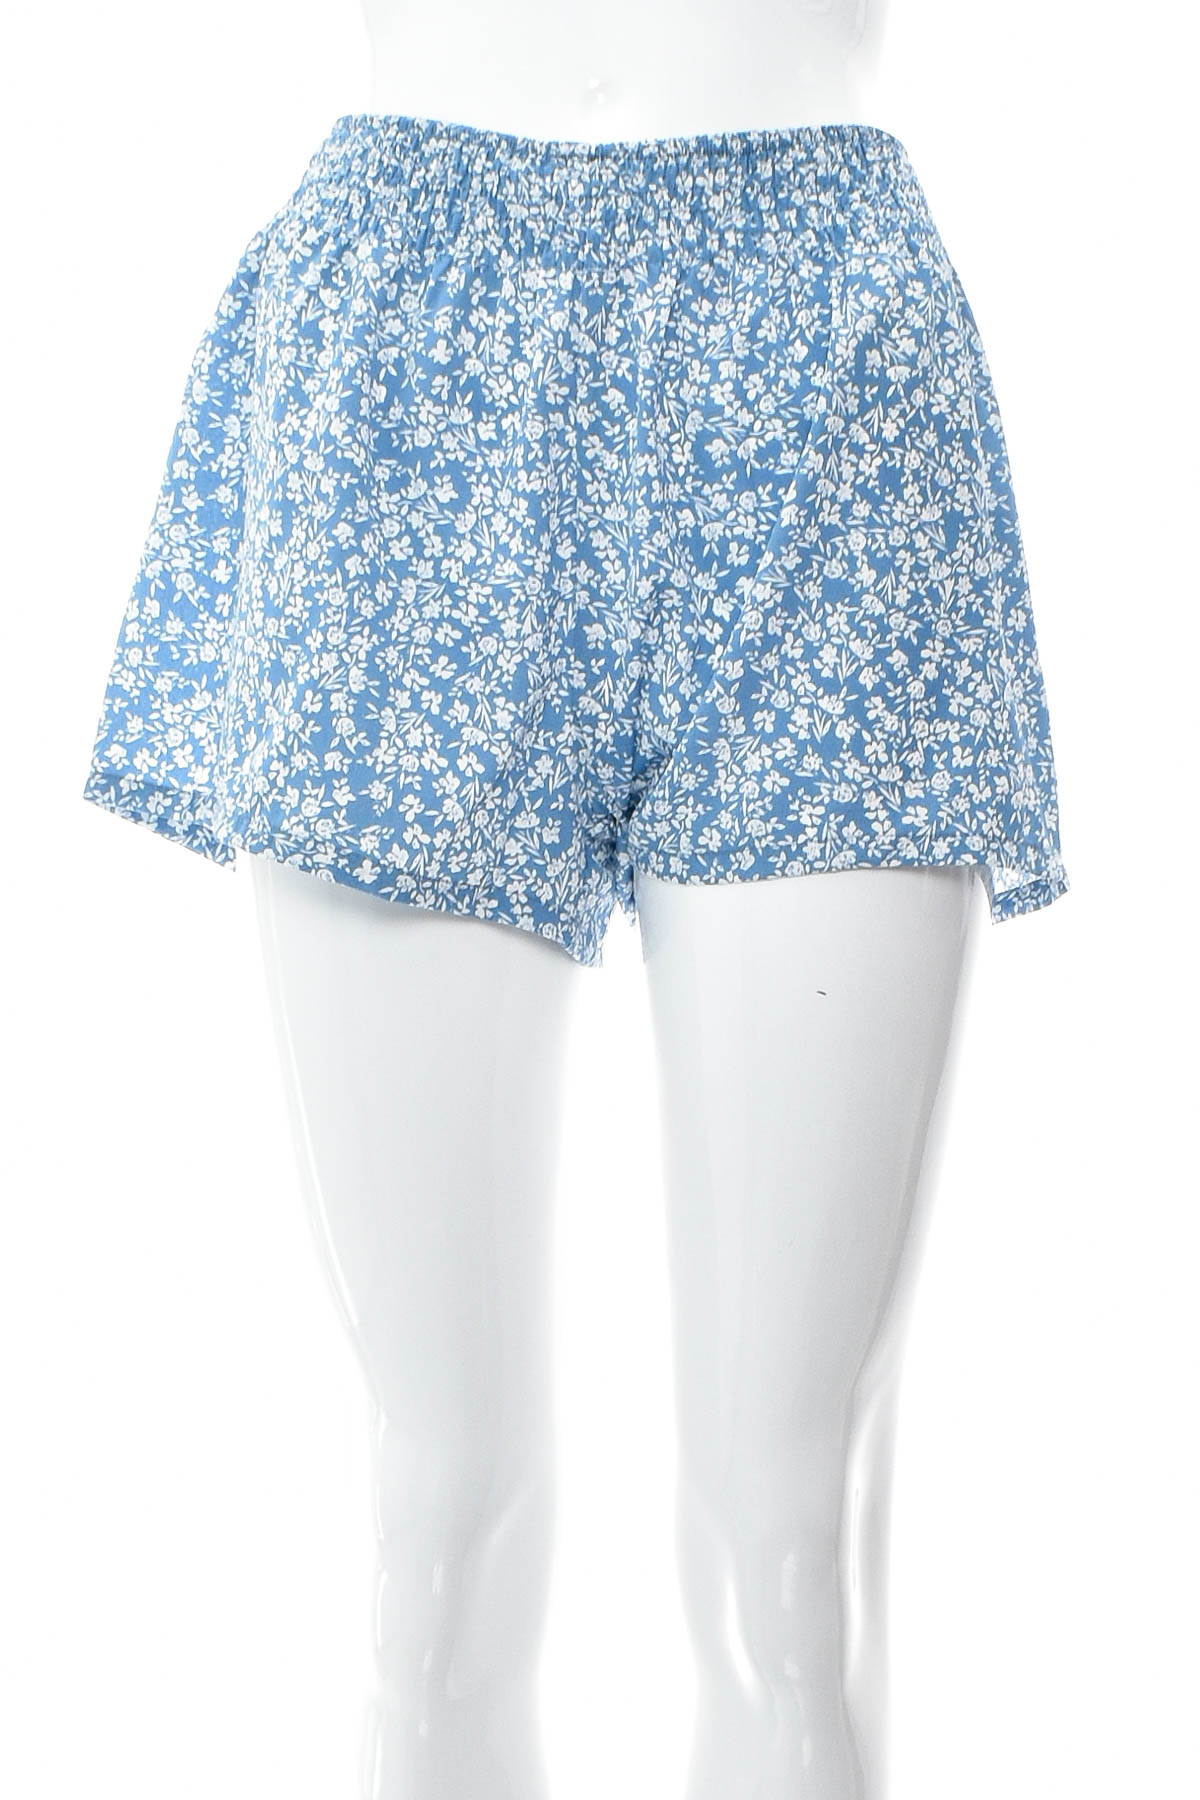 Shorts for girls - SHEIN - 0